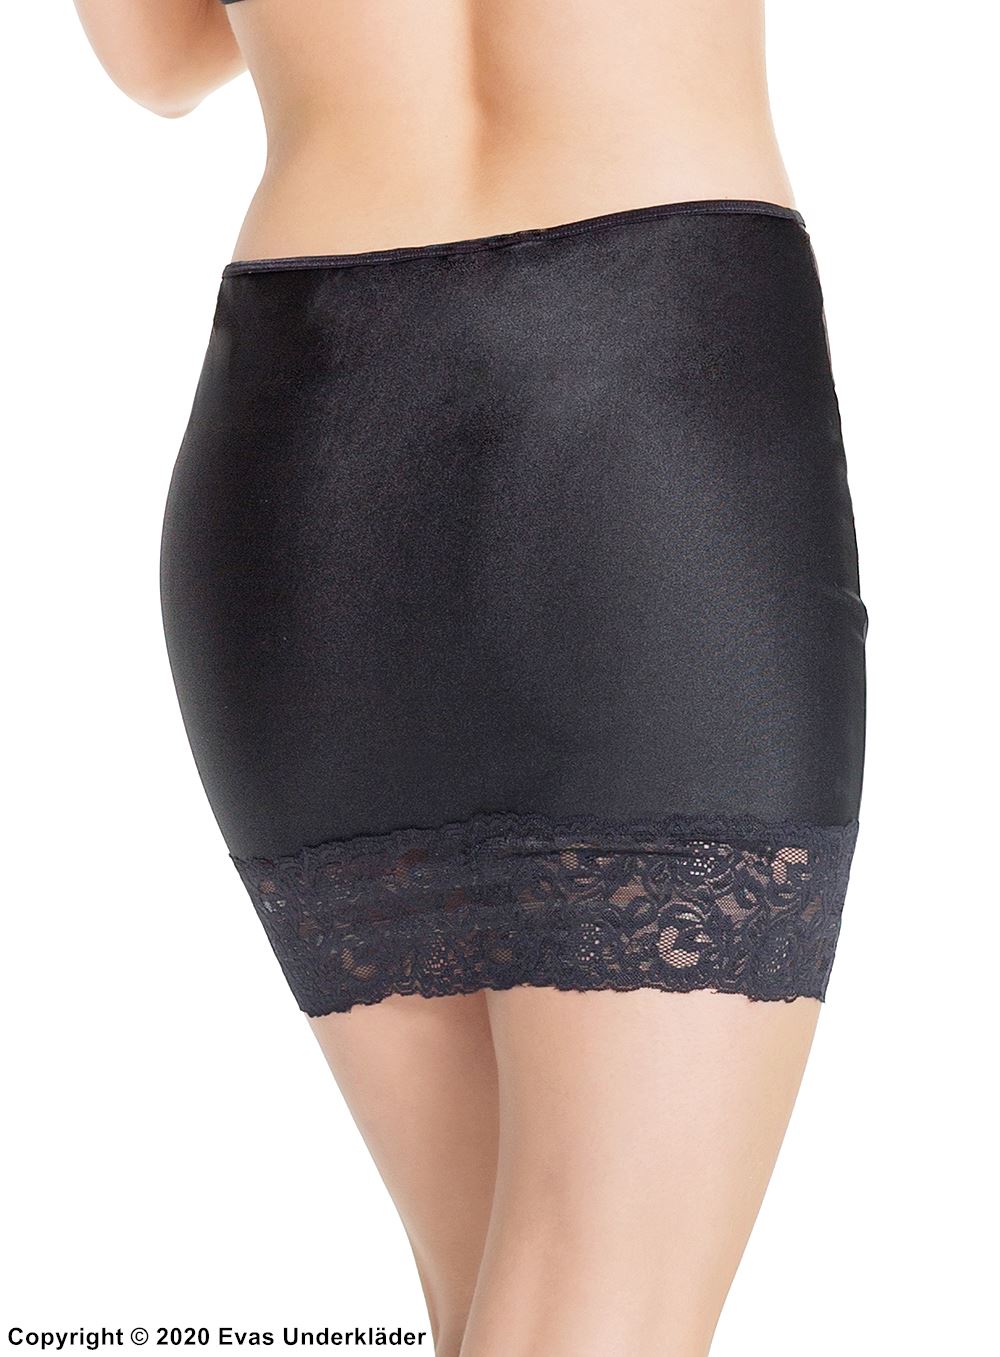 Slip skirt, high waist, lace inlay